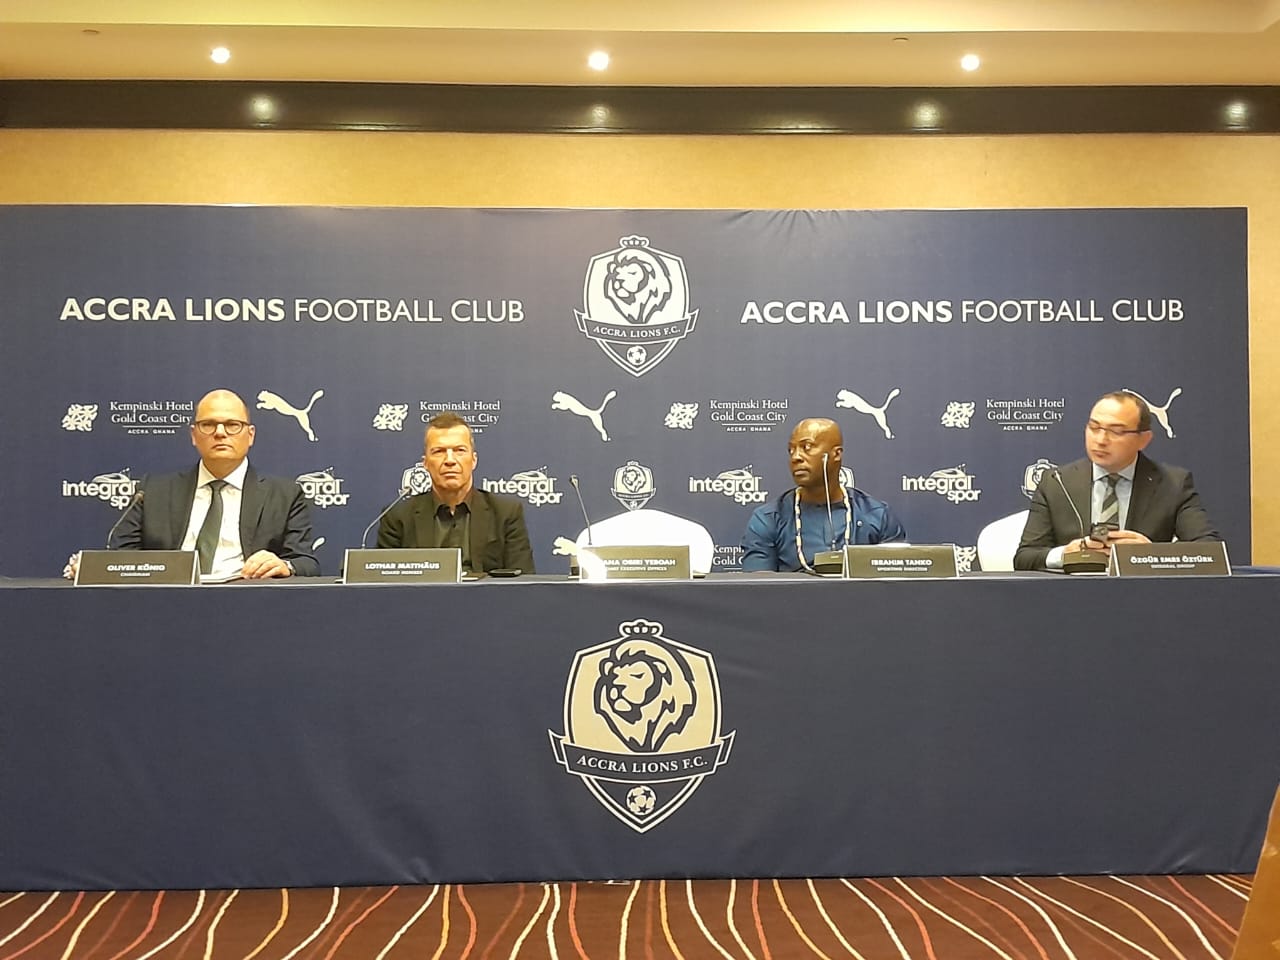 Germany legend Lothar Matthäus unveiled as shareholder of Ghana Premier League outfit Accra Lions